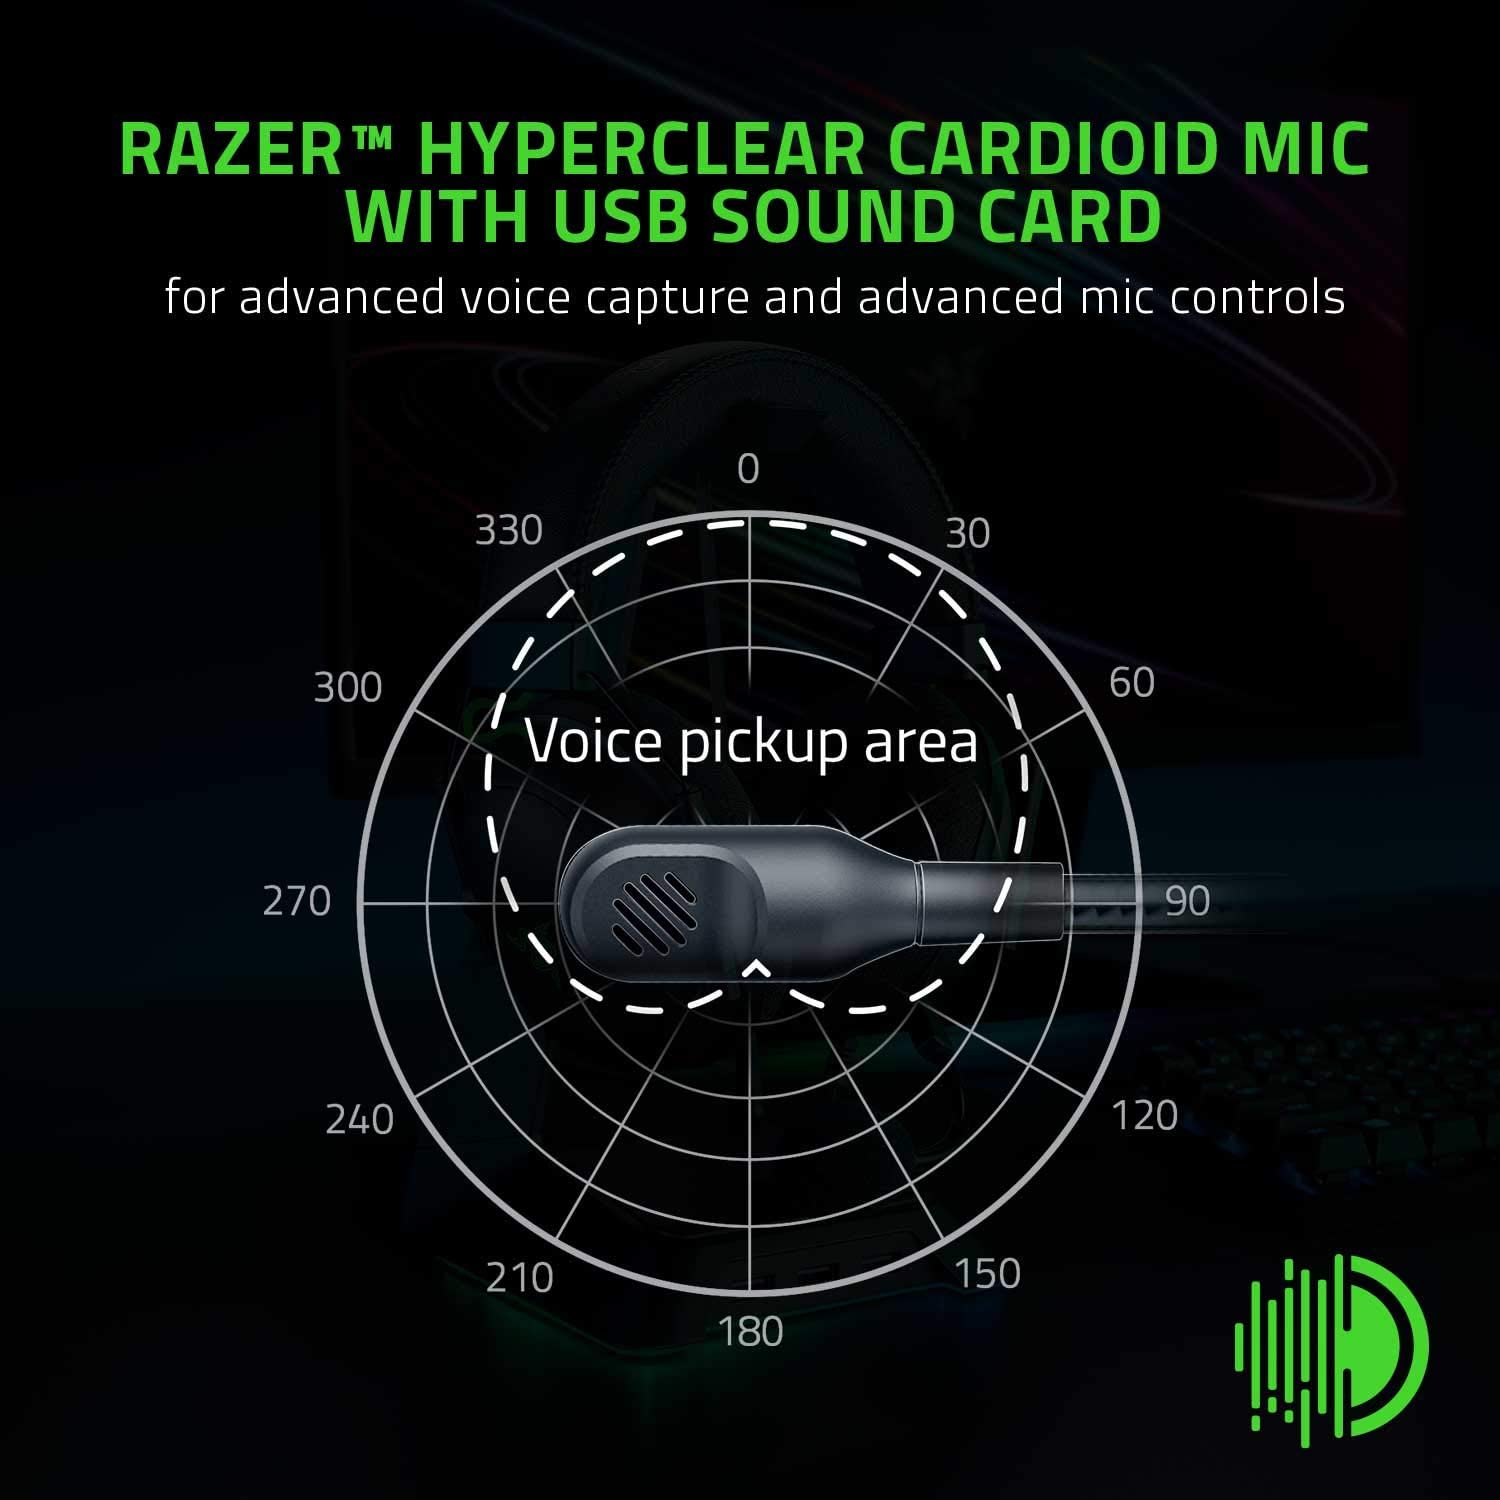 Razer Blackshark V2 Special Edition Multi-Platform Wired Gaming Headset - Black/Green